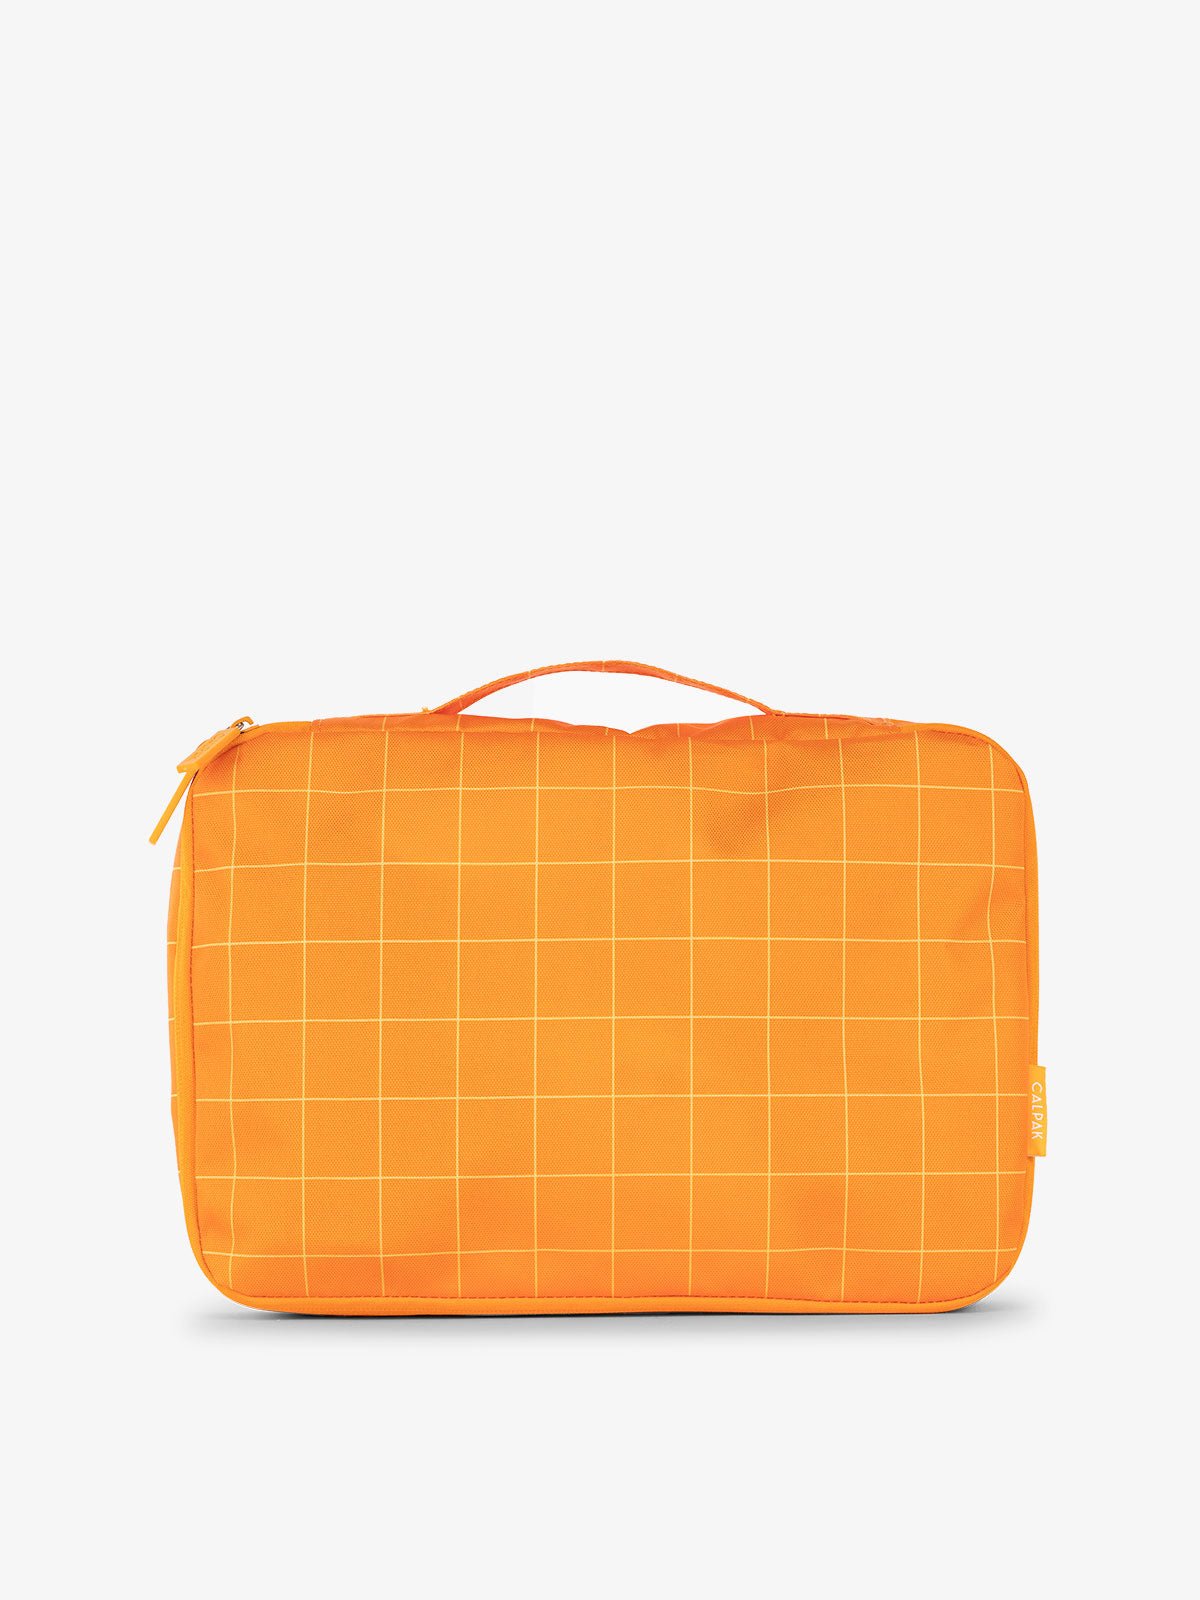 CALPAK packing cubes with top handle in orange grid print